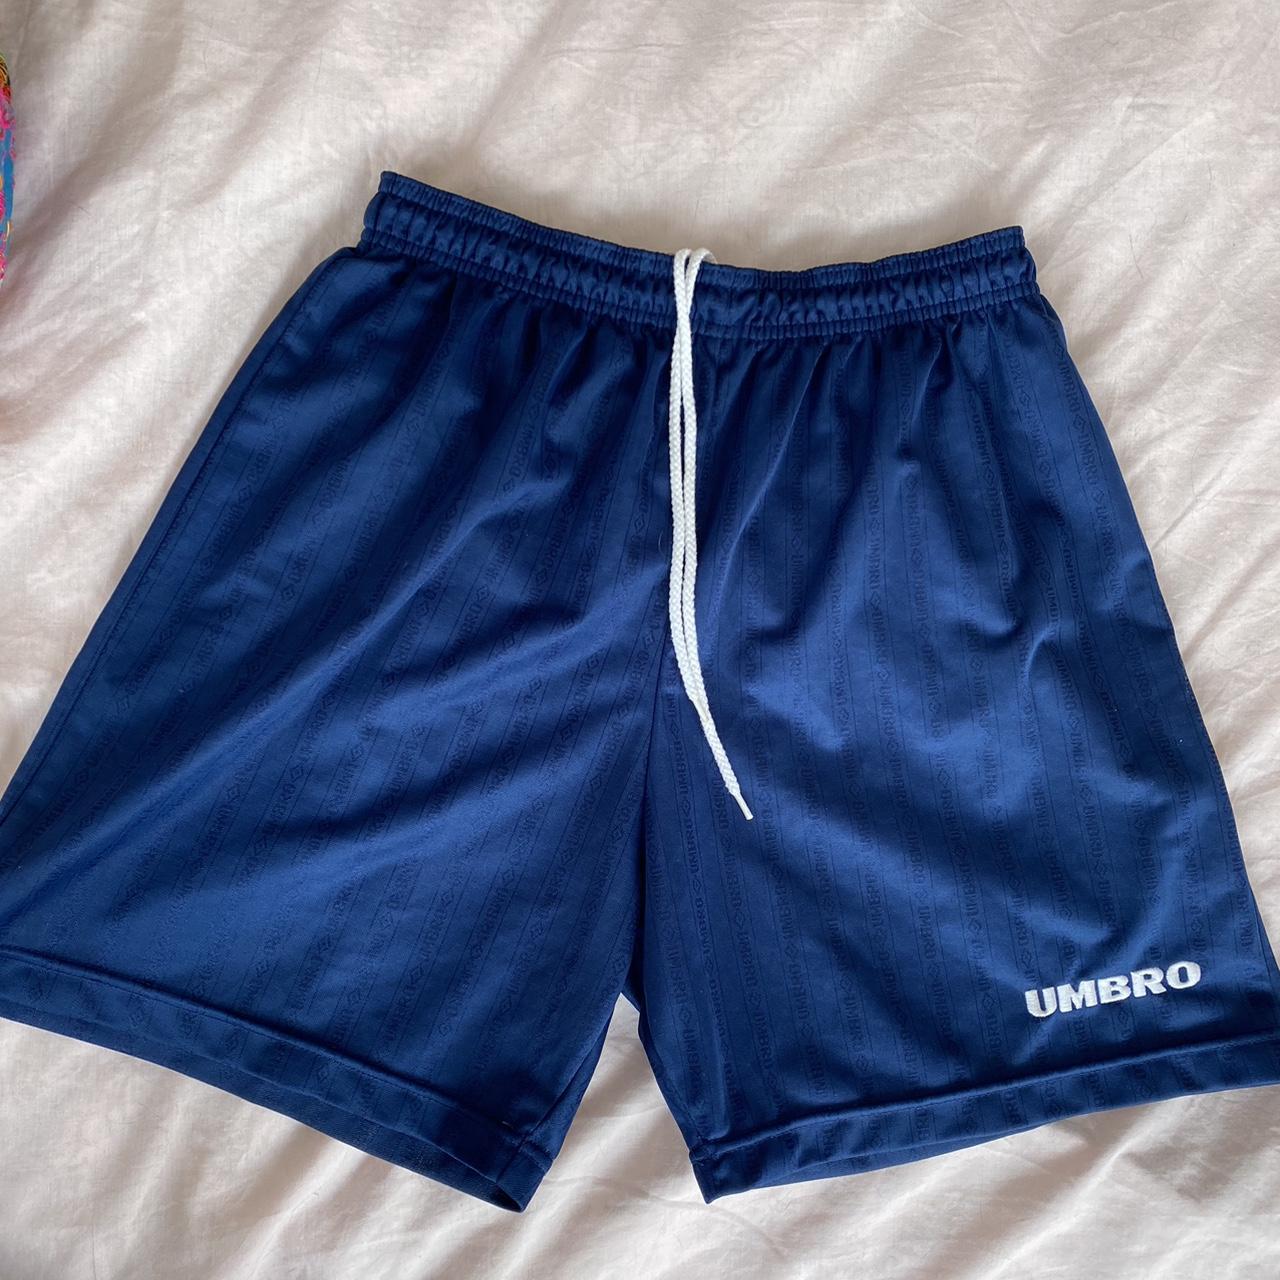 Umbro vintage sports shorts perfect condition - Depop